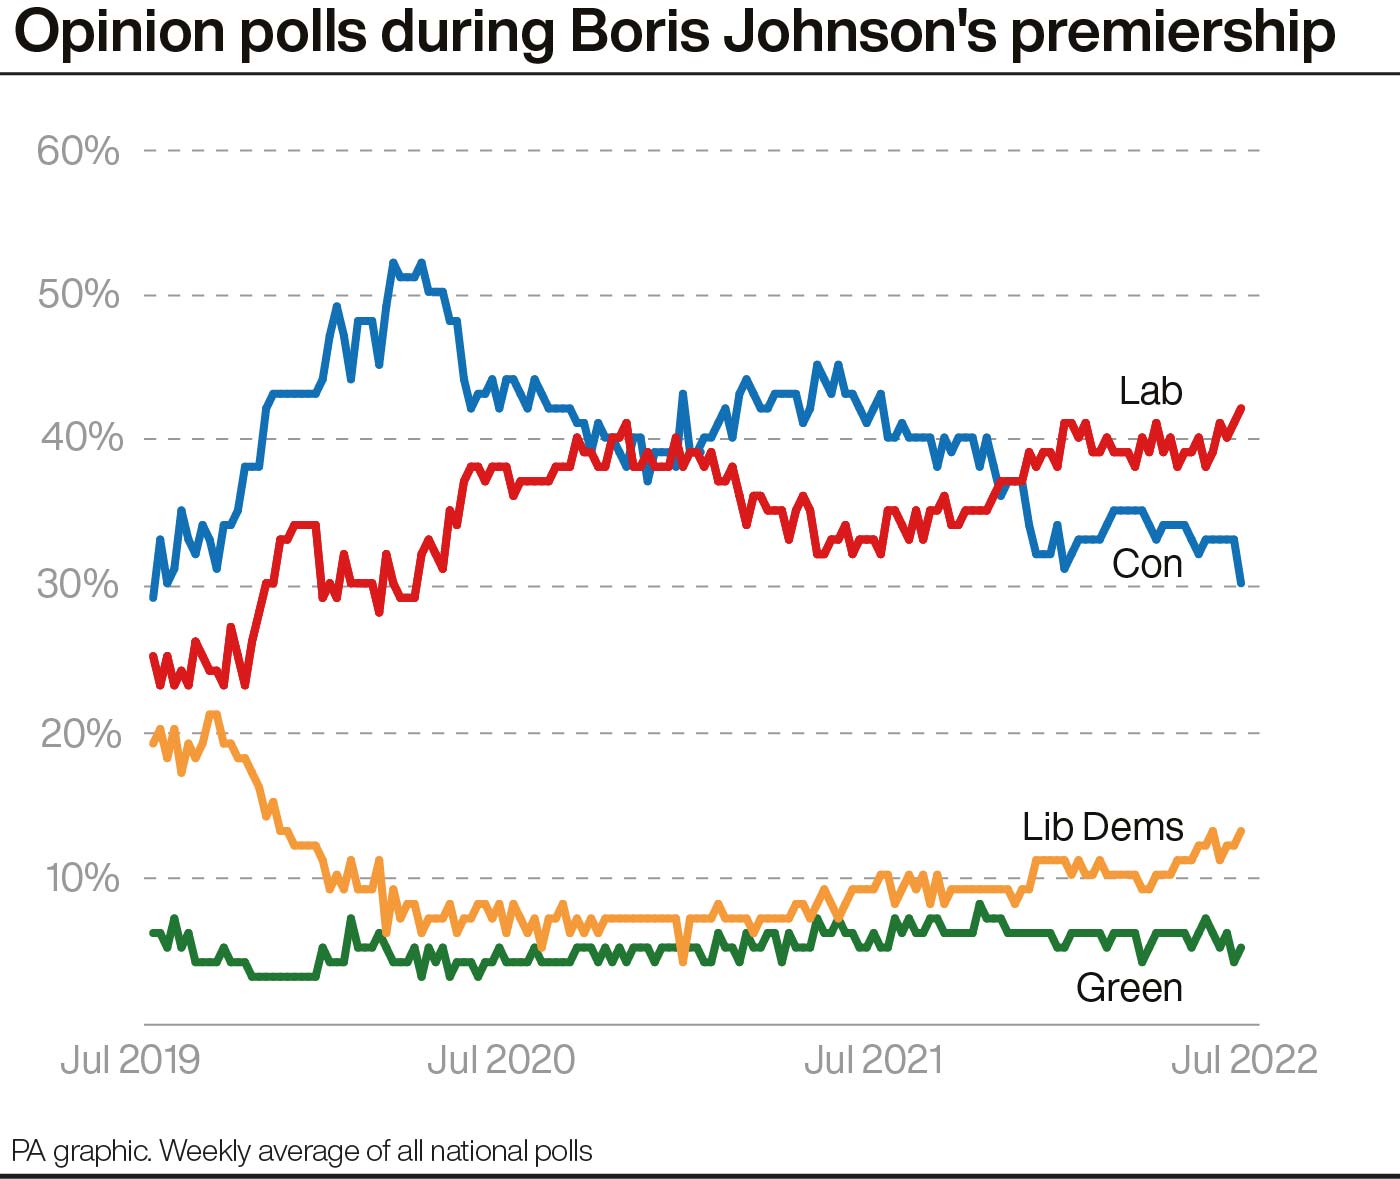 Graph showing opinion polls during Boris Johnson's premiership